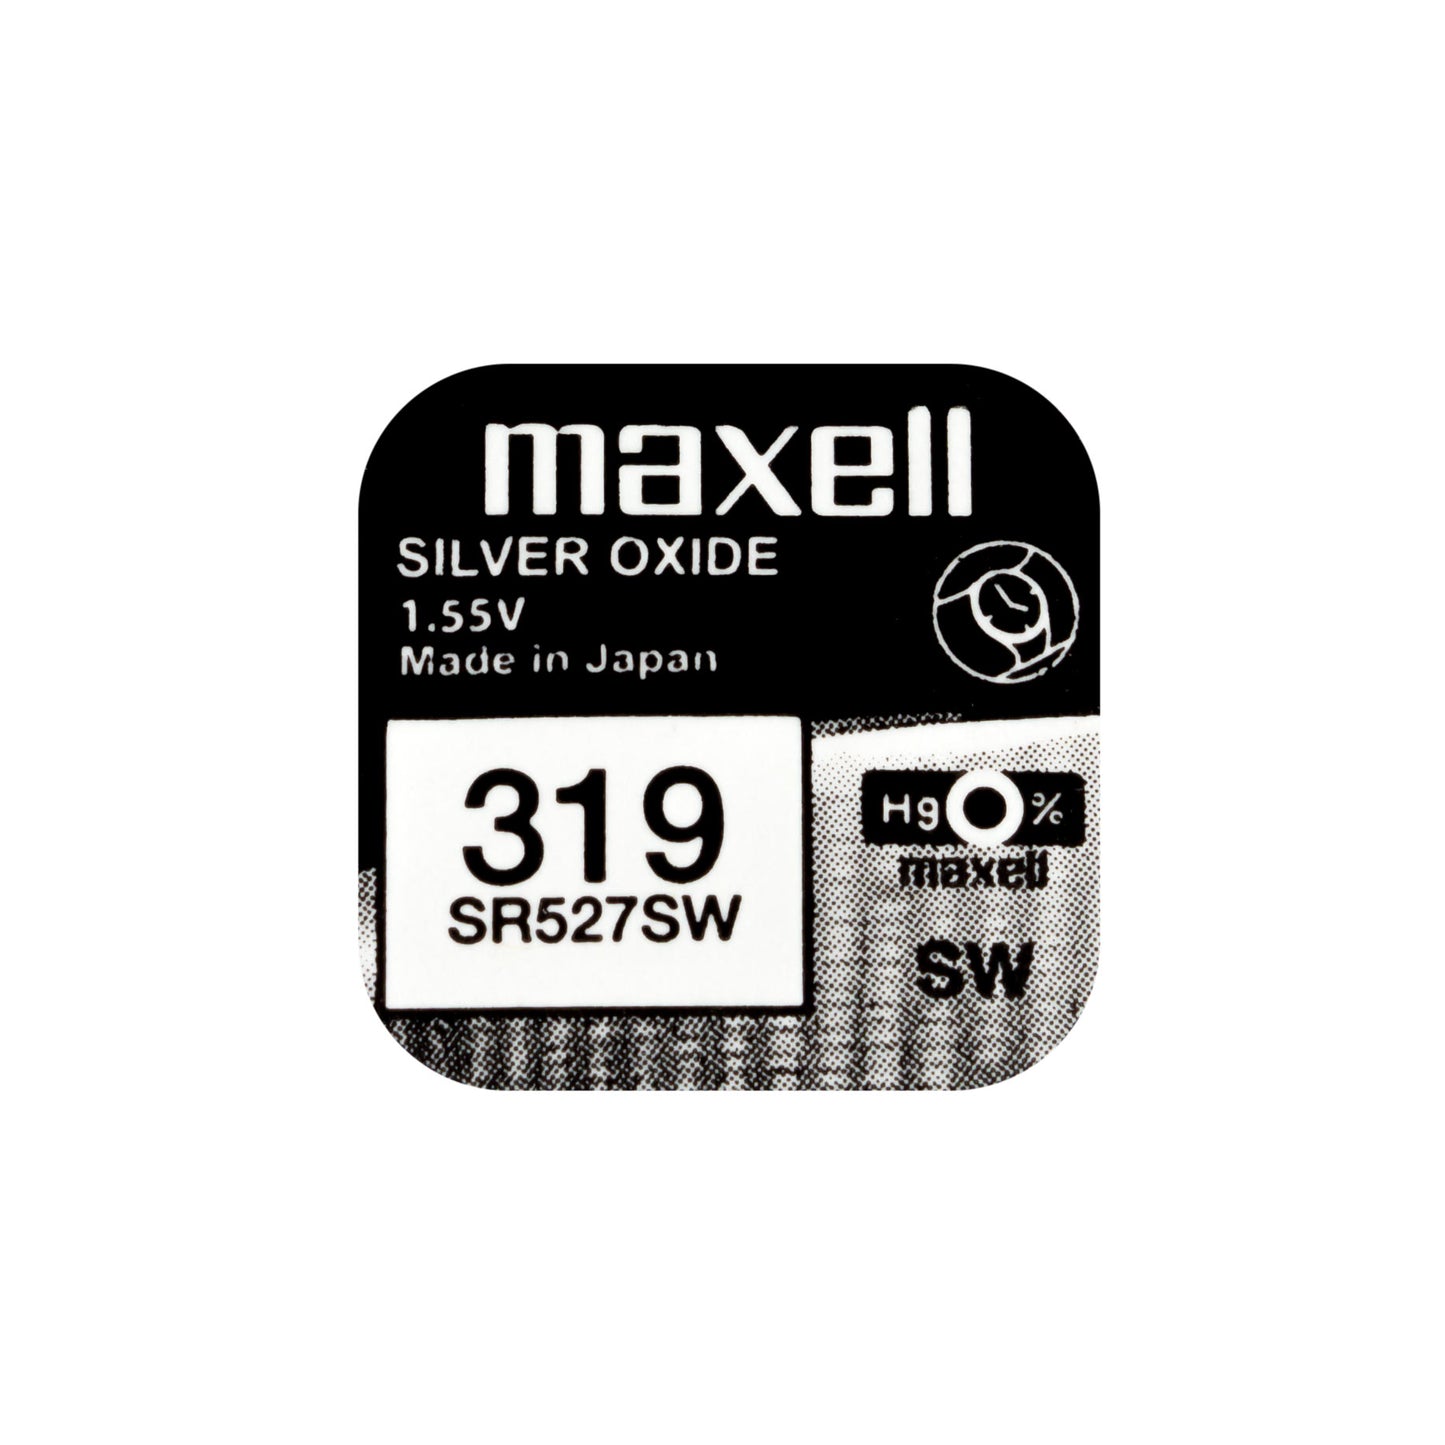 Maxell SR527SW (319) Silver Oxide Watch Batteries